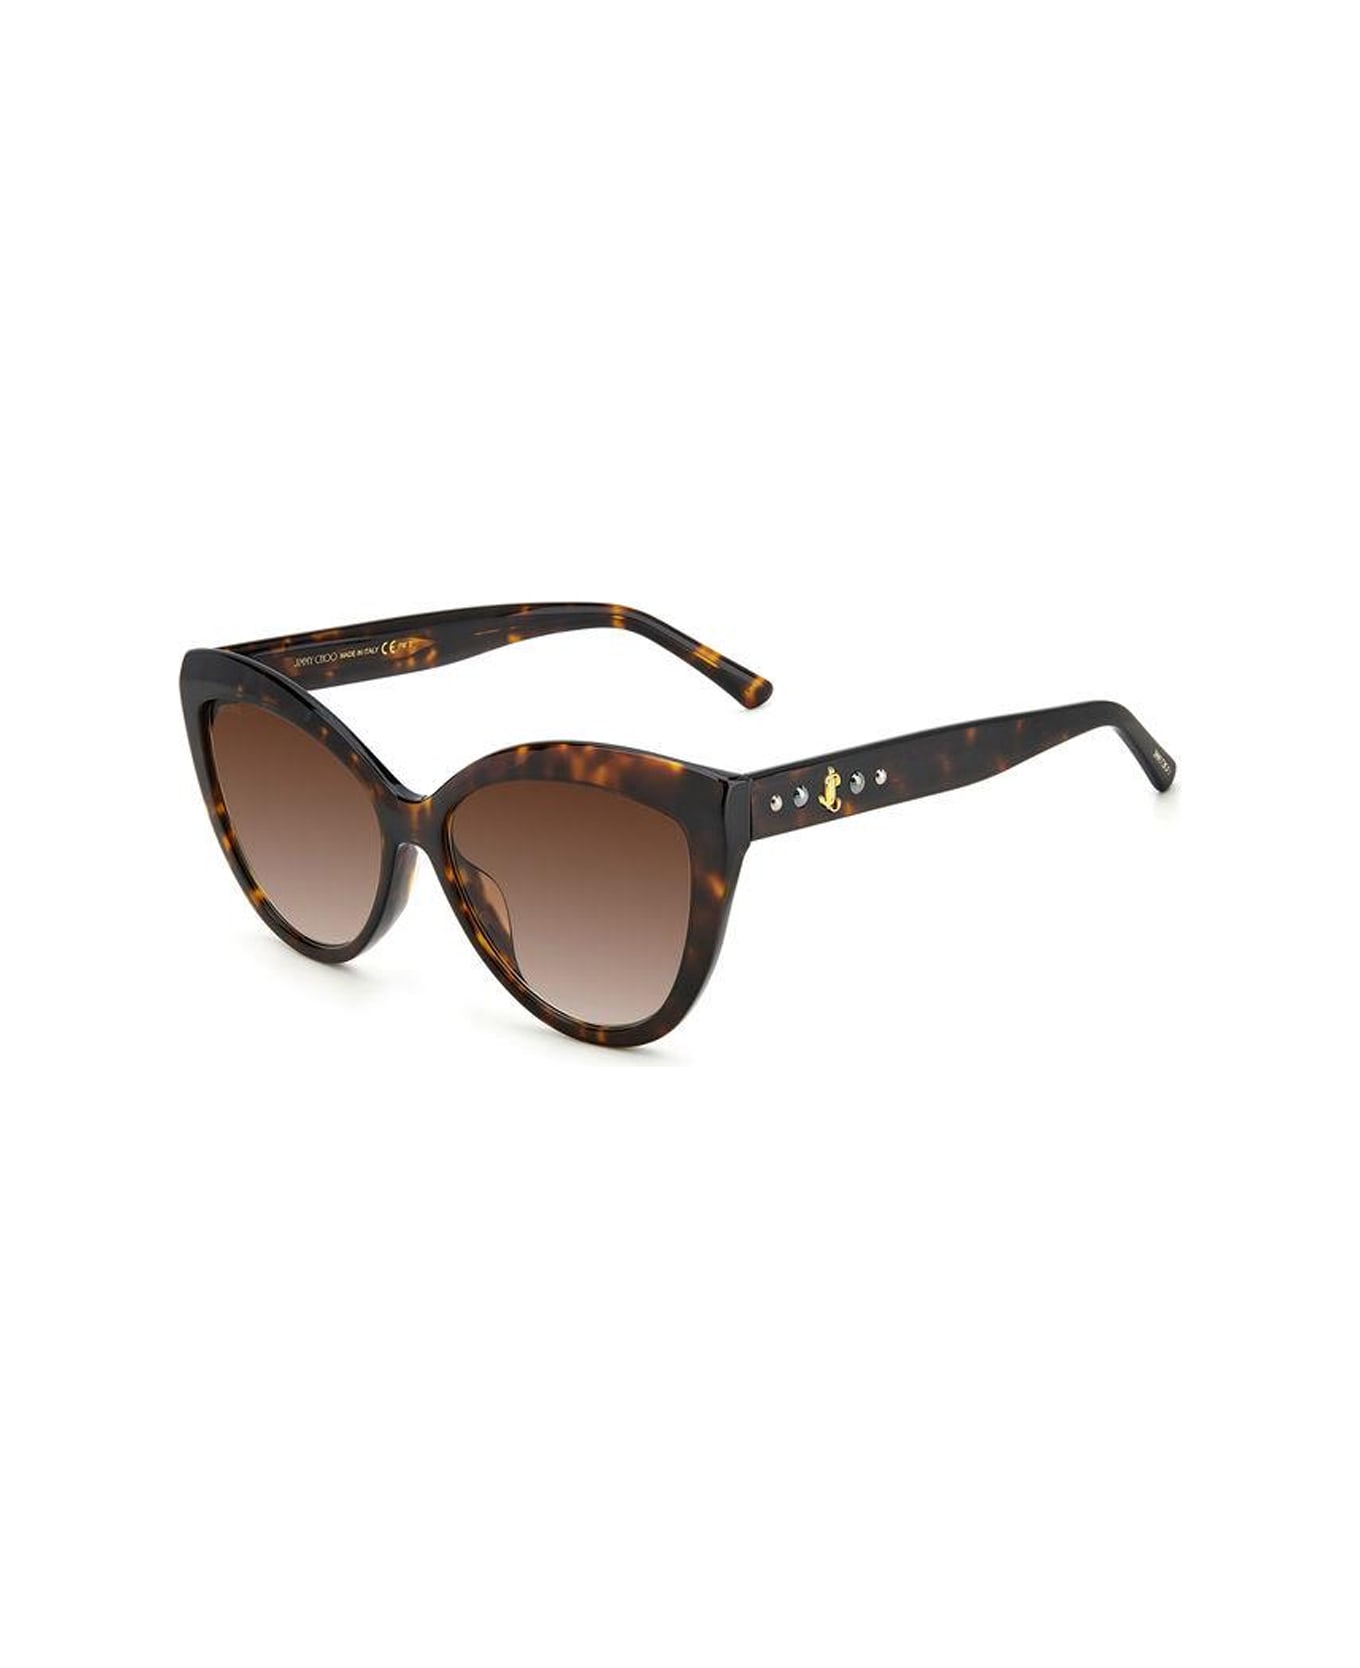 Jimmy Choo Eyewear Sinnie/g/s Top sunglasses - Marrone